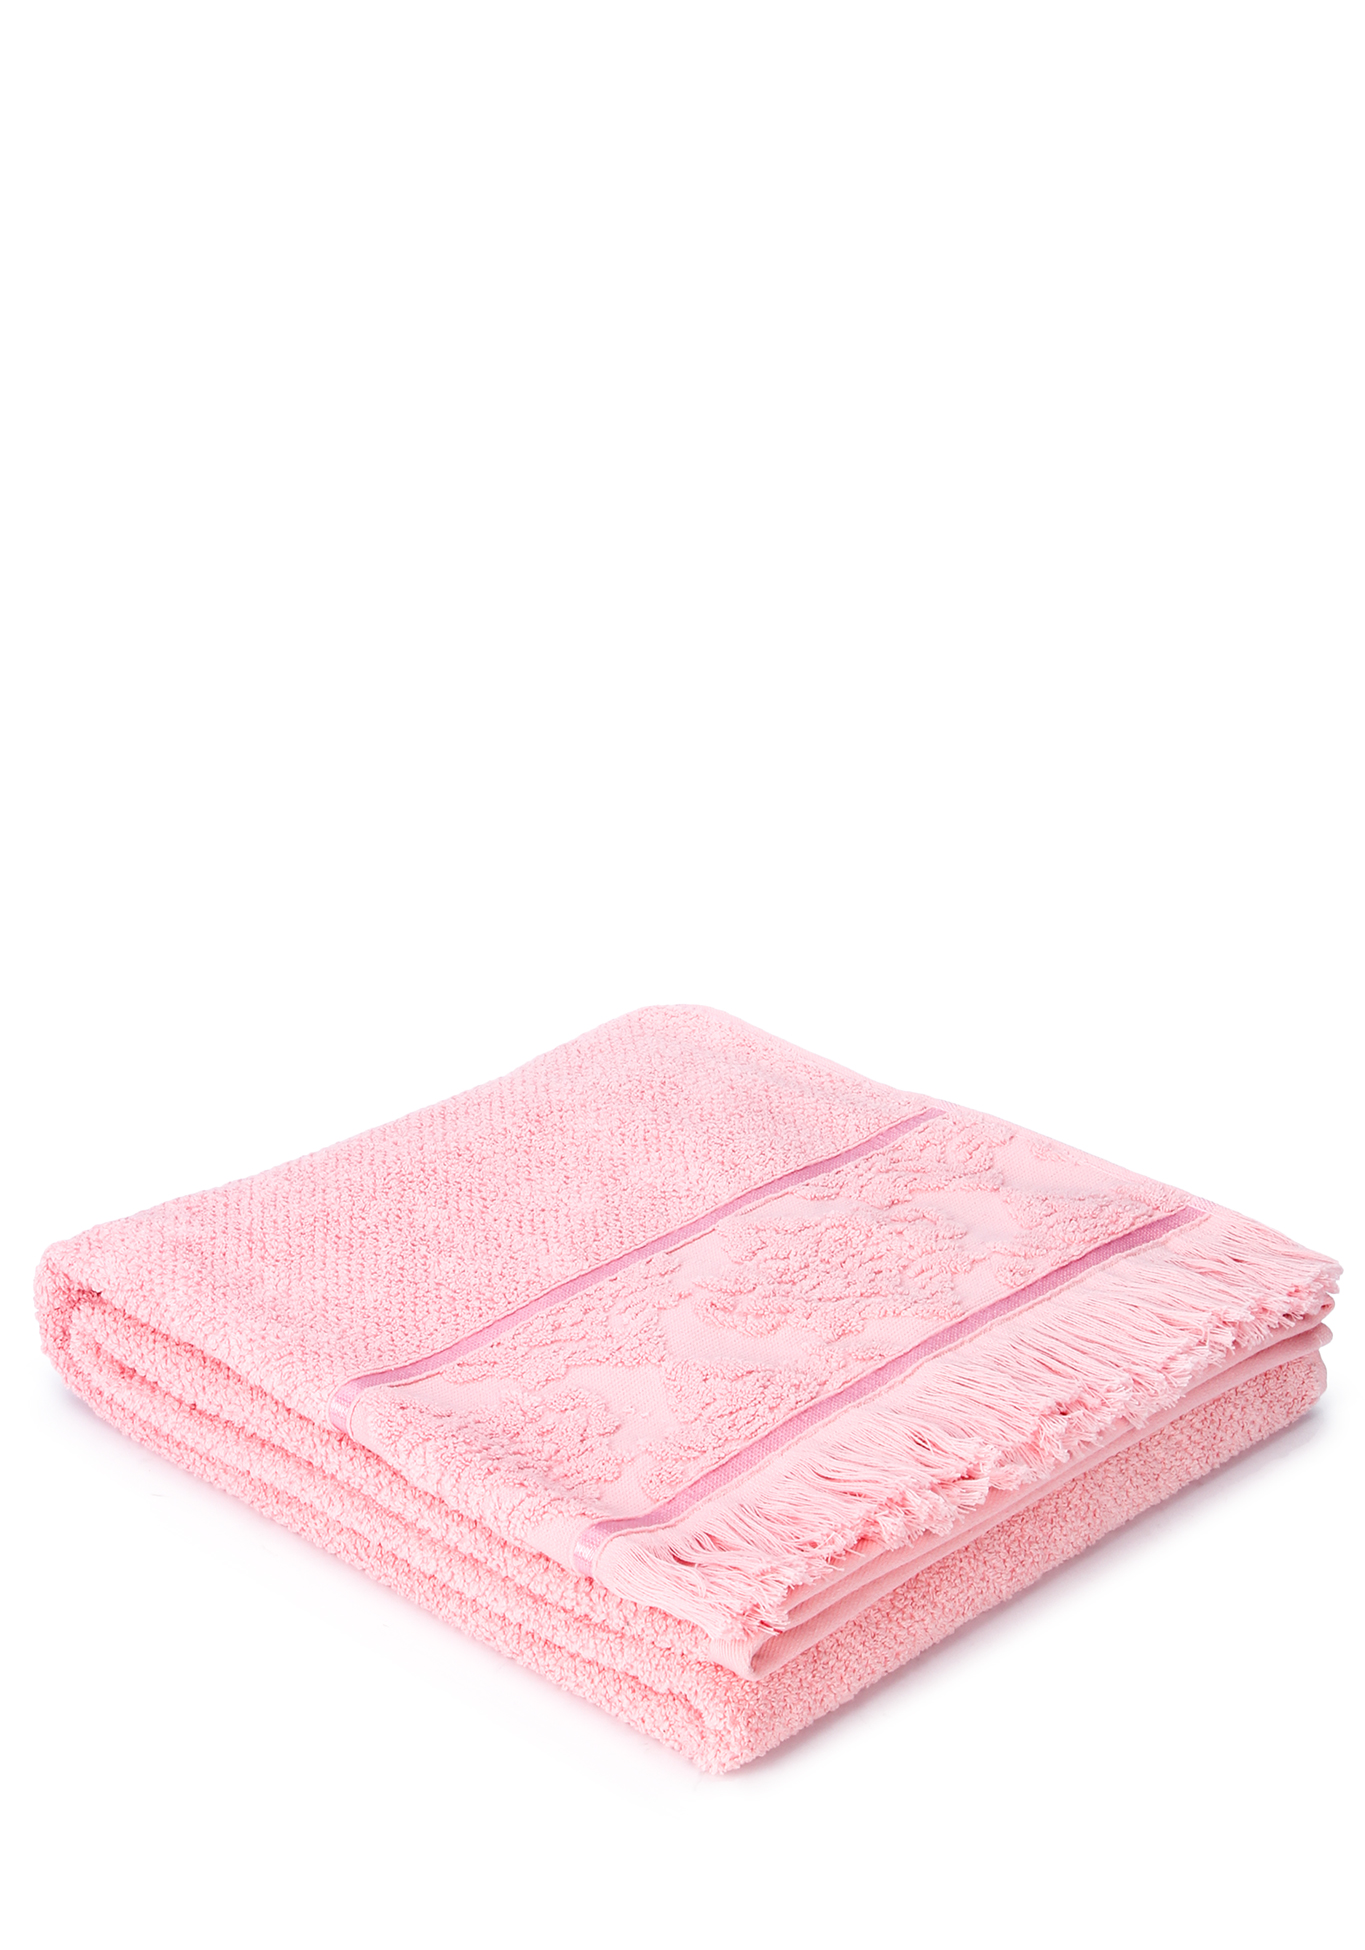 Полотенце махровое "Премиум-качество" Comfort Linе, цвет лаванда, размер 50 x 90 - фото 10